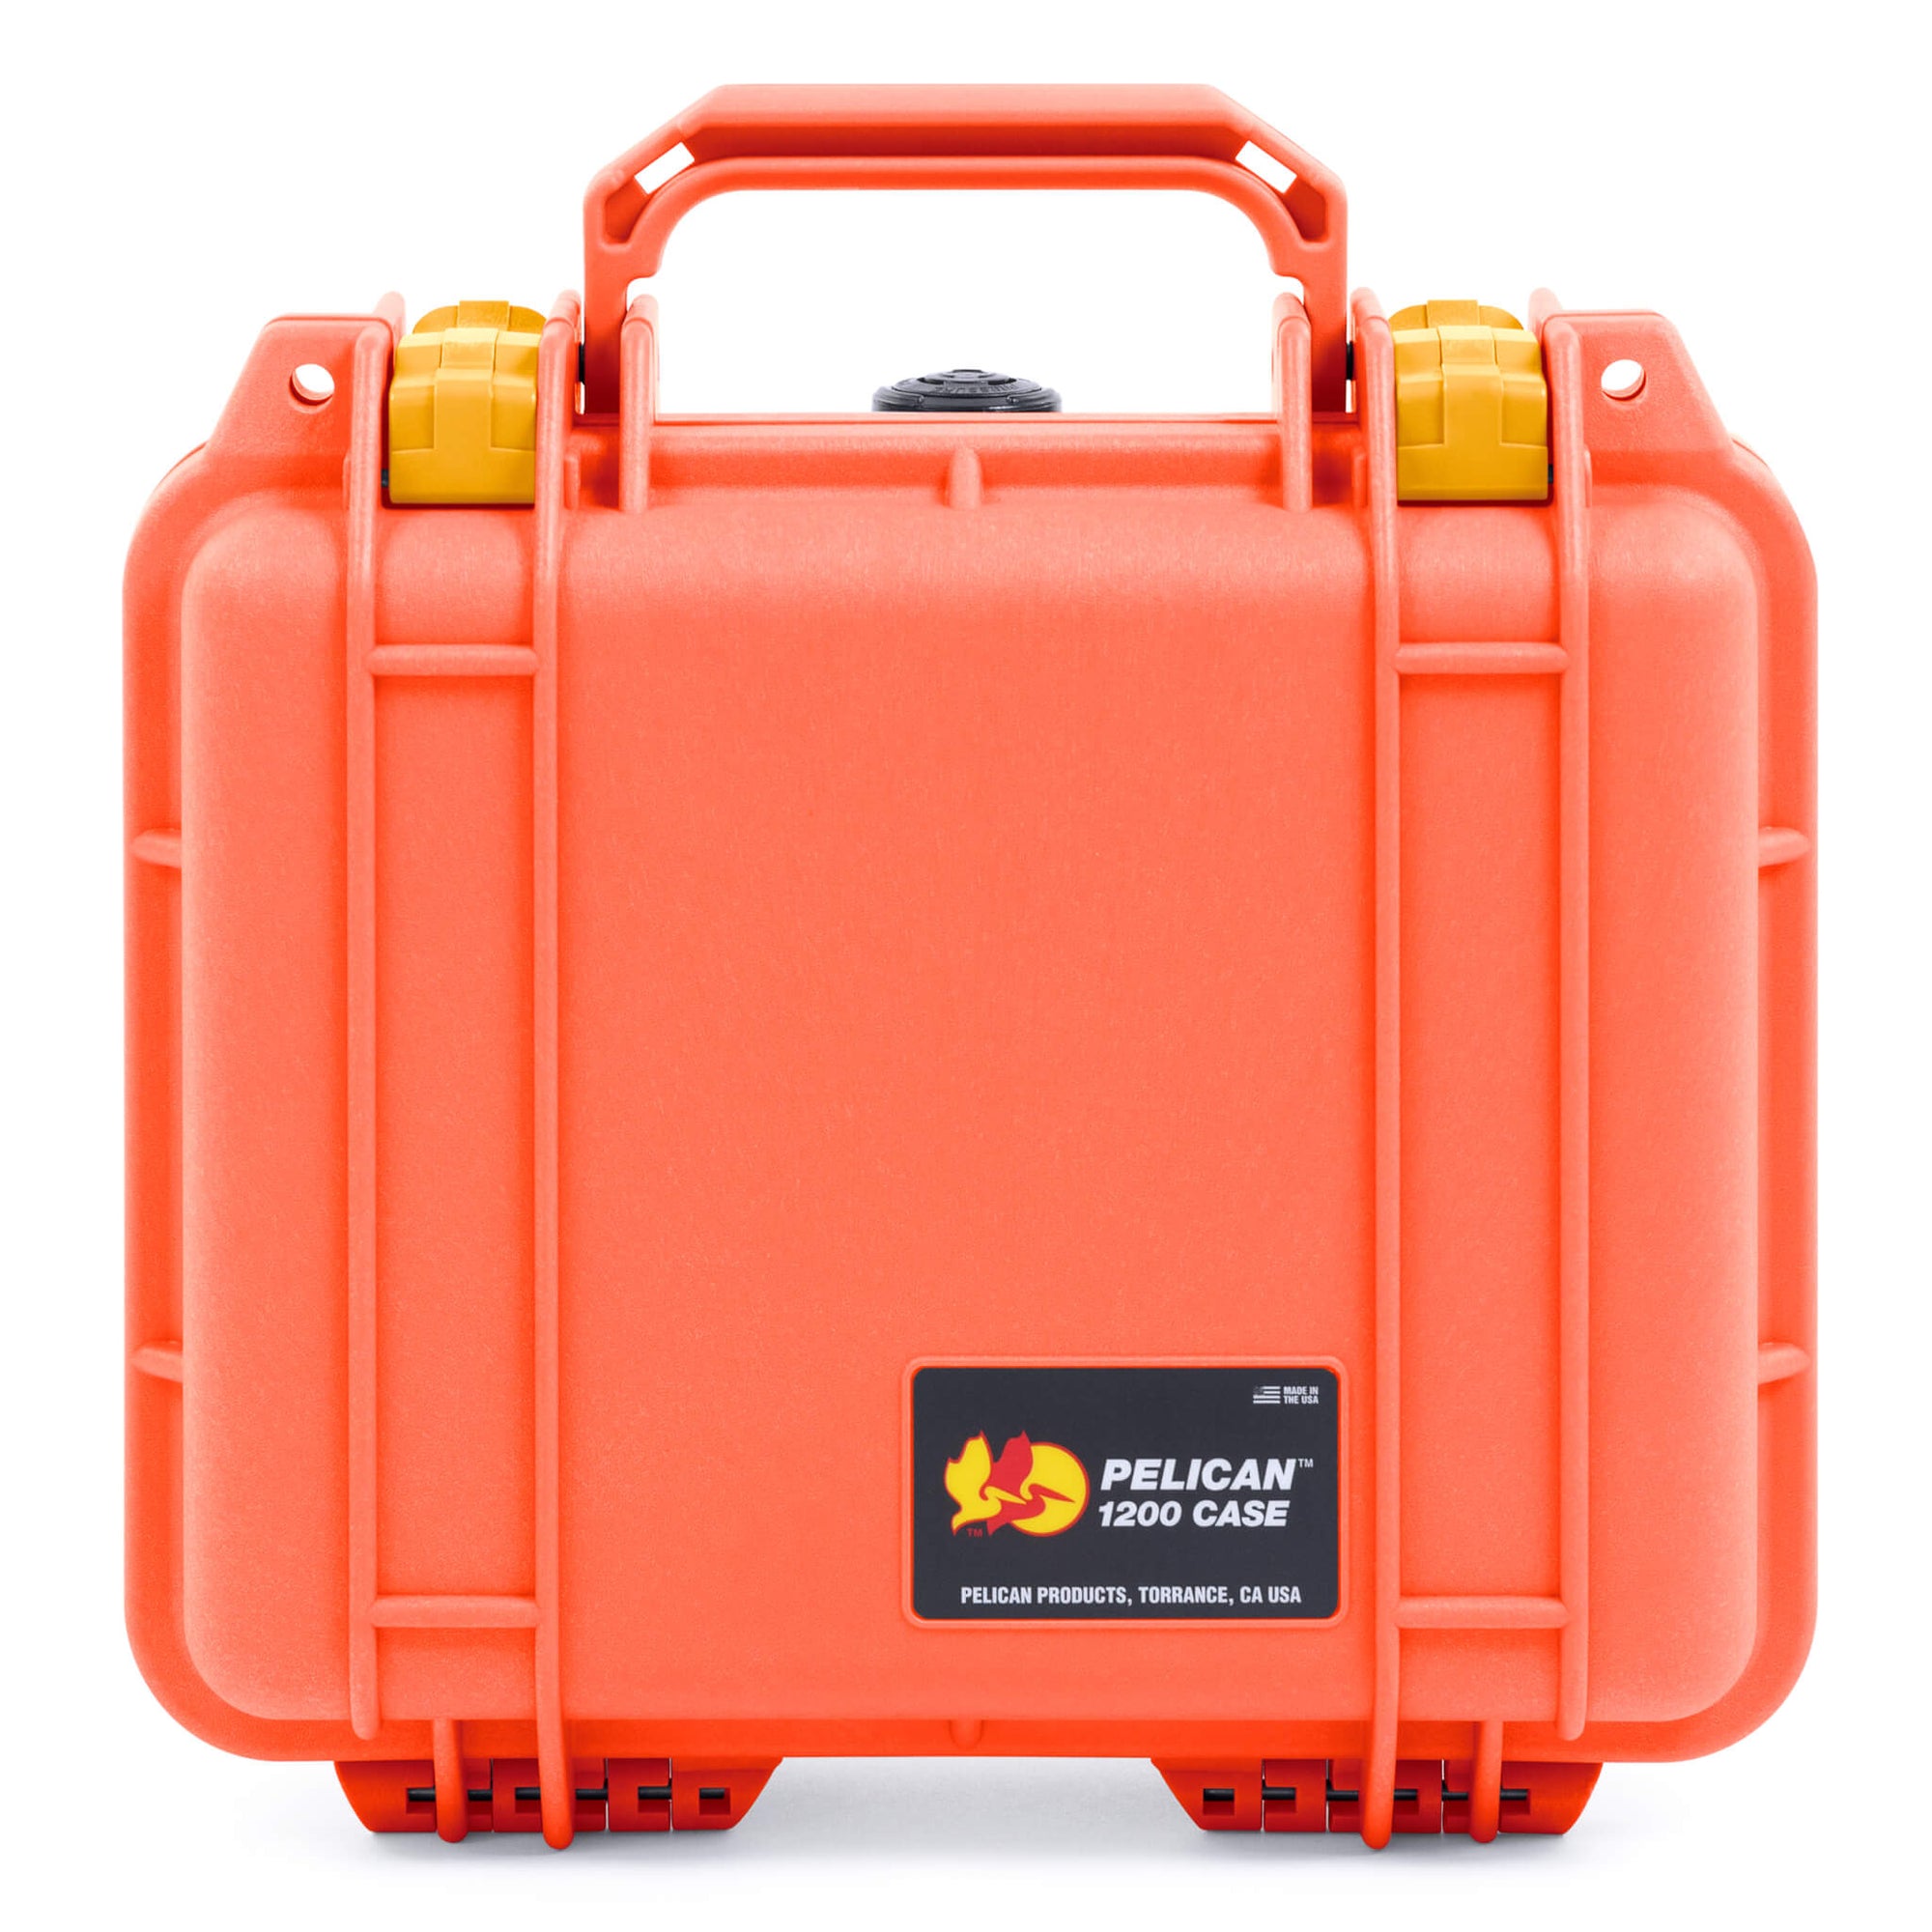 Pelican 1200 Case, Orange with Yellow Latches ColorCase 